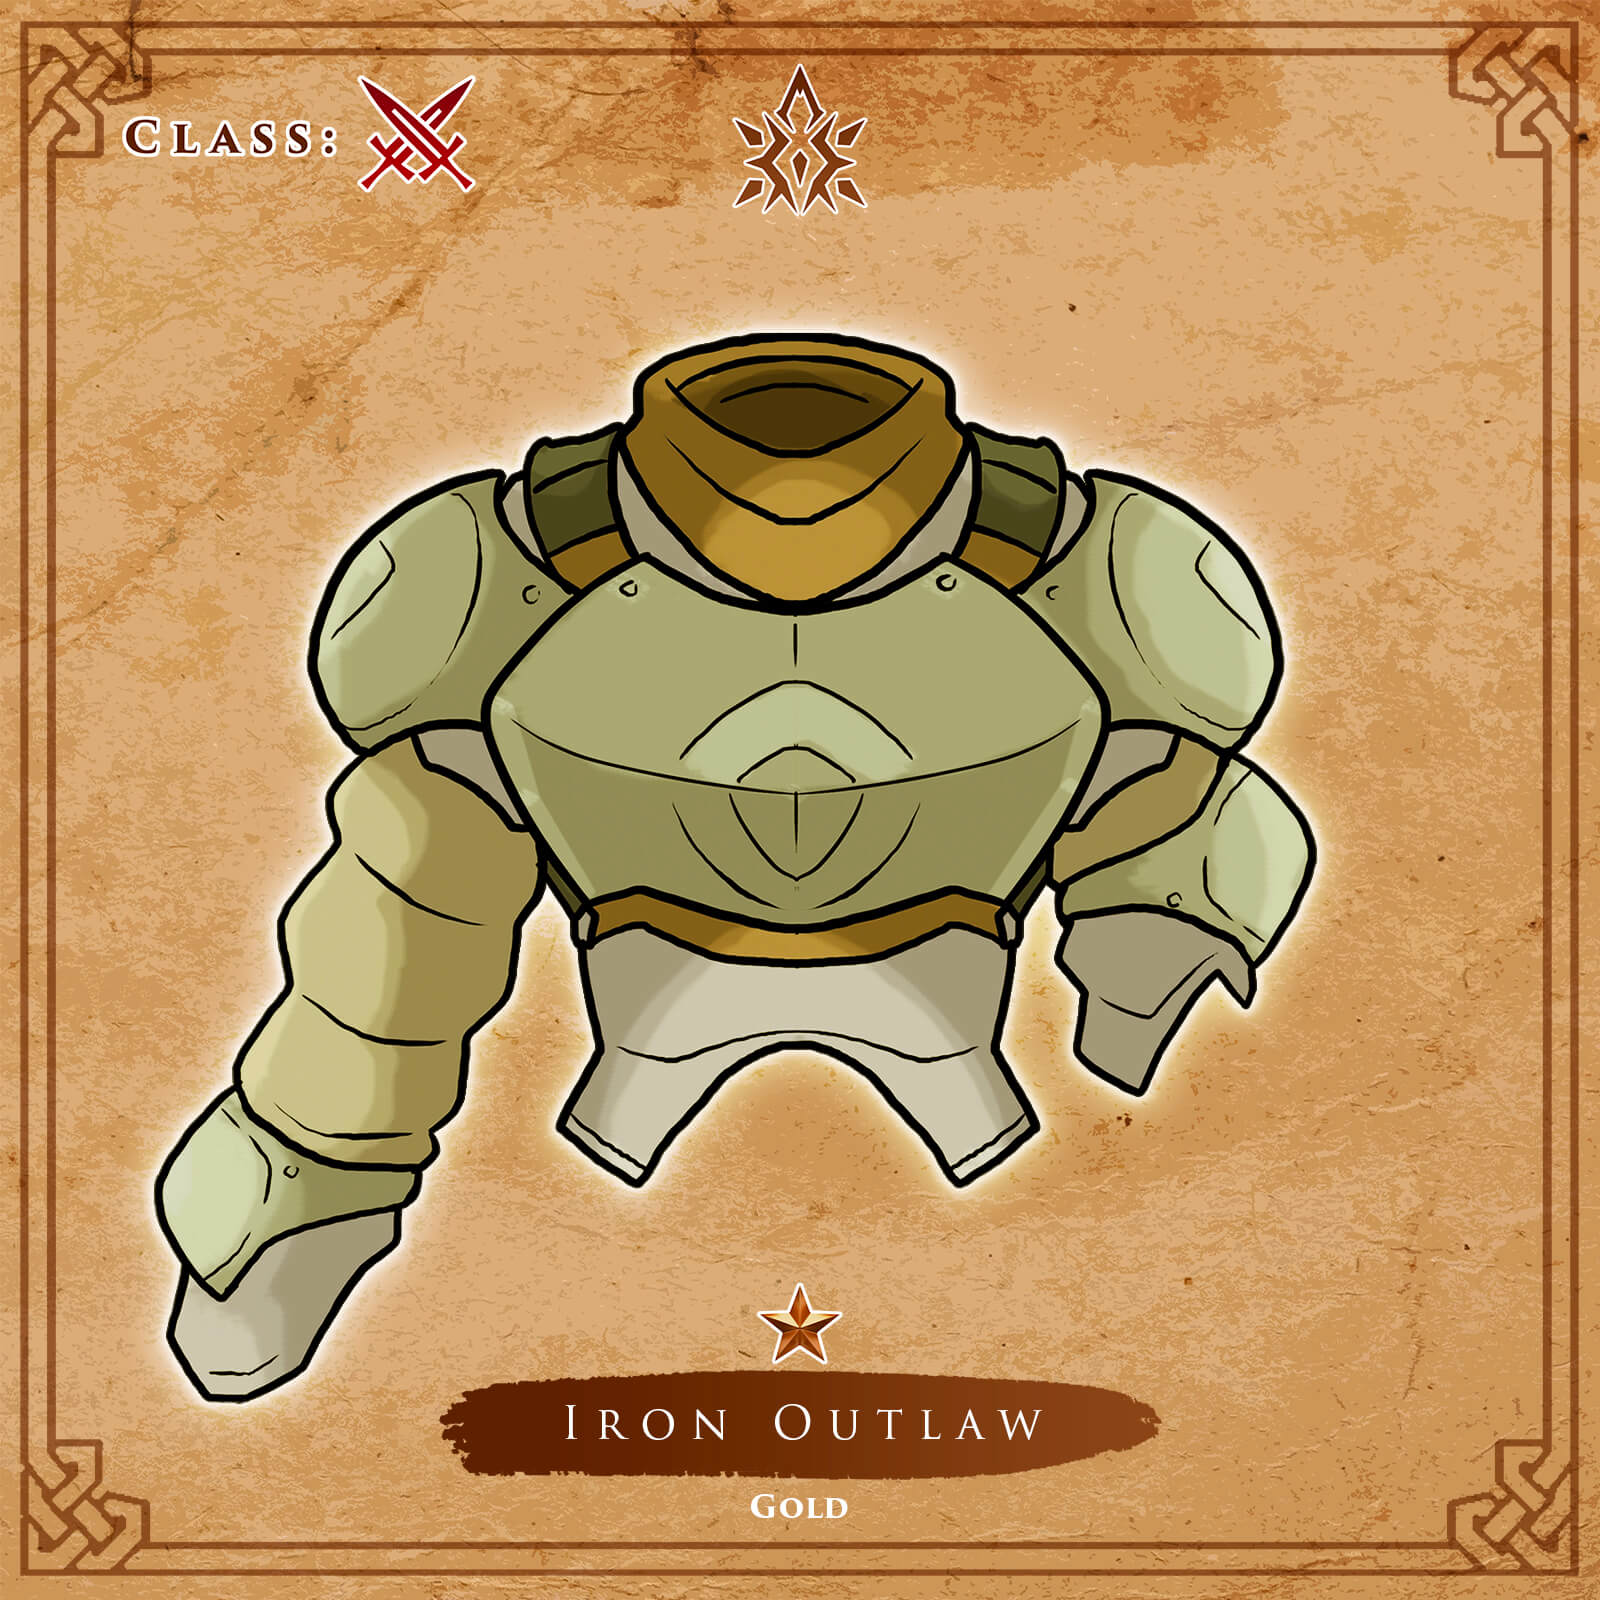 Iron Outlaw Gold